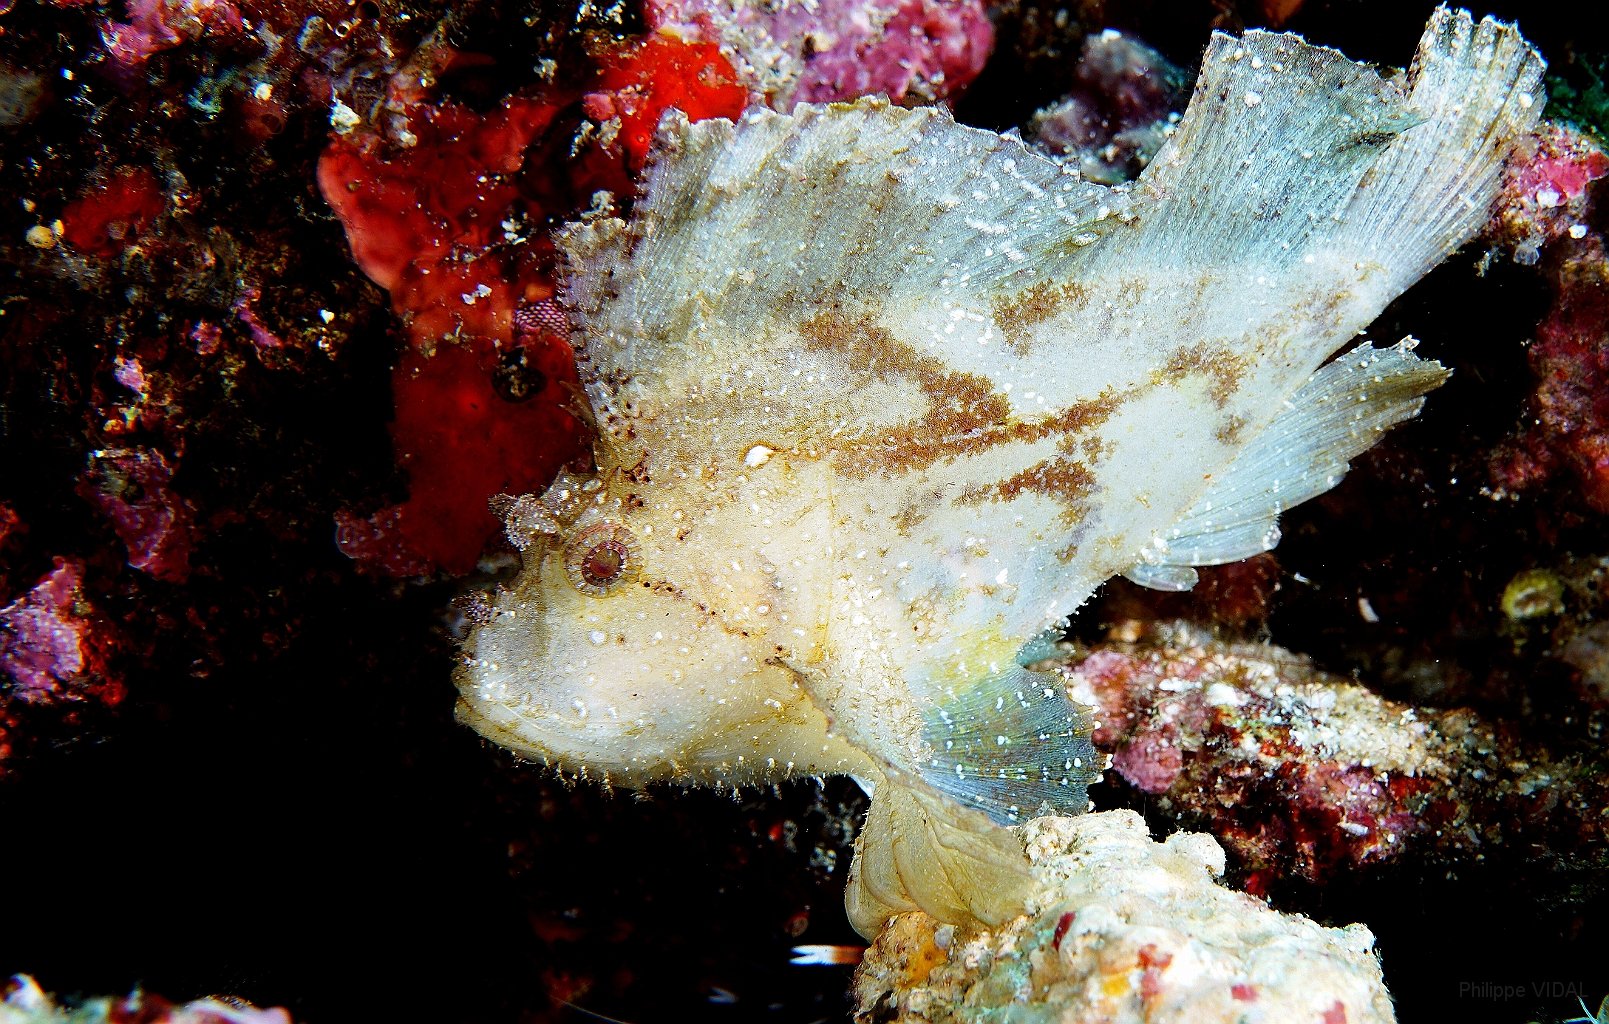 Banda Sea 2018 - DSC05997_rc - Leaf Scorpionfish - Poisson feuille - Taenianotus triacanthus.jpg